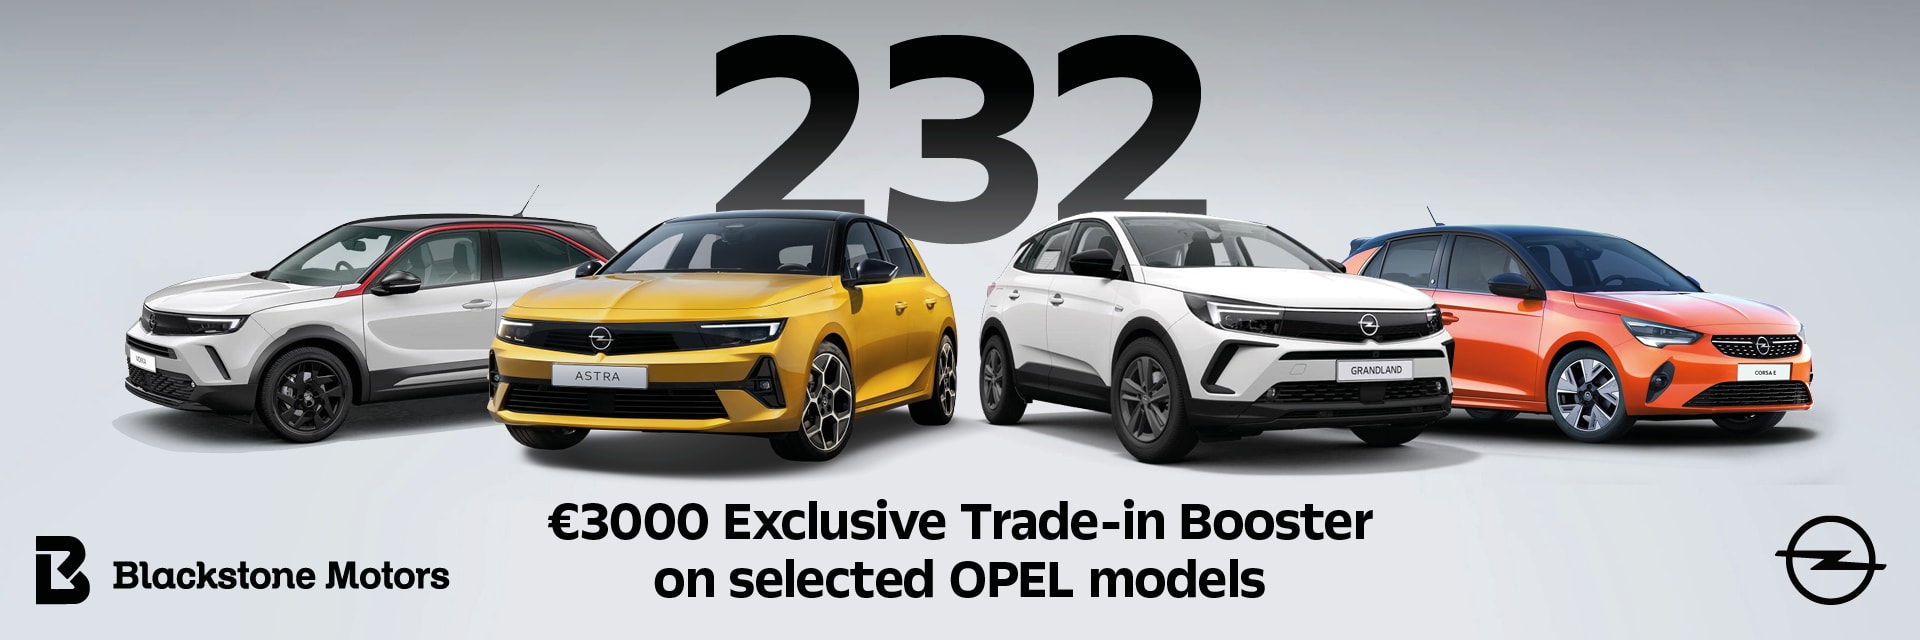 Opel 232 Banners